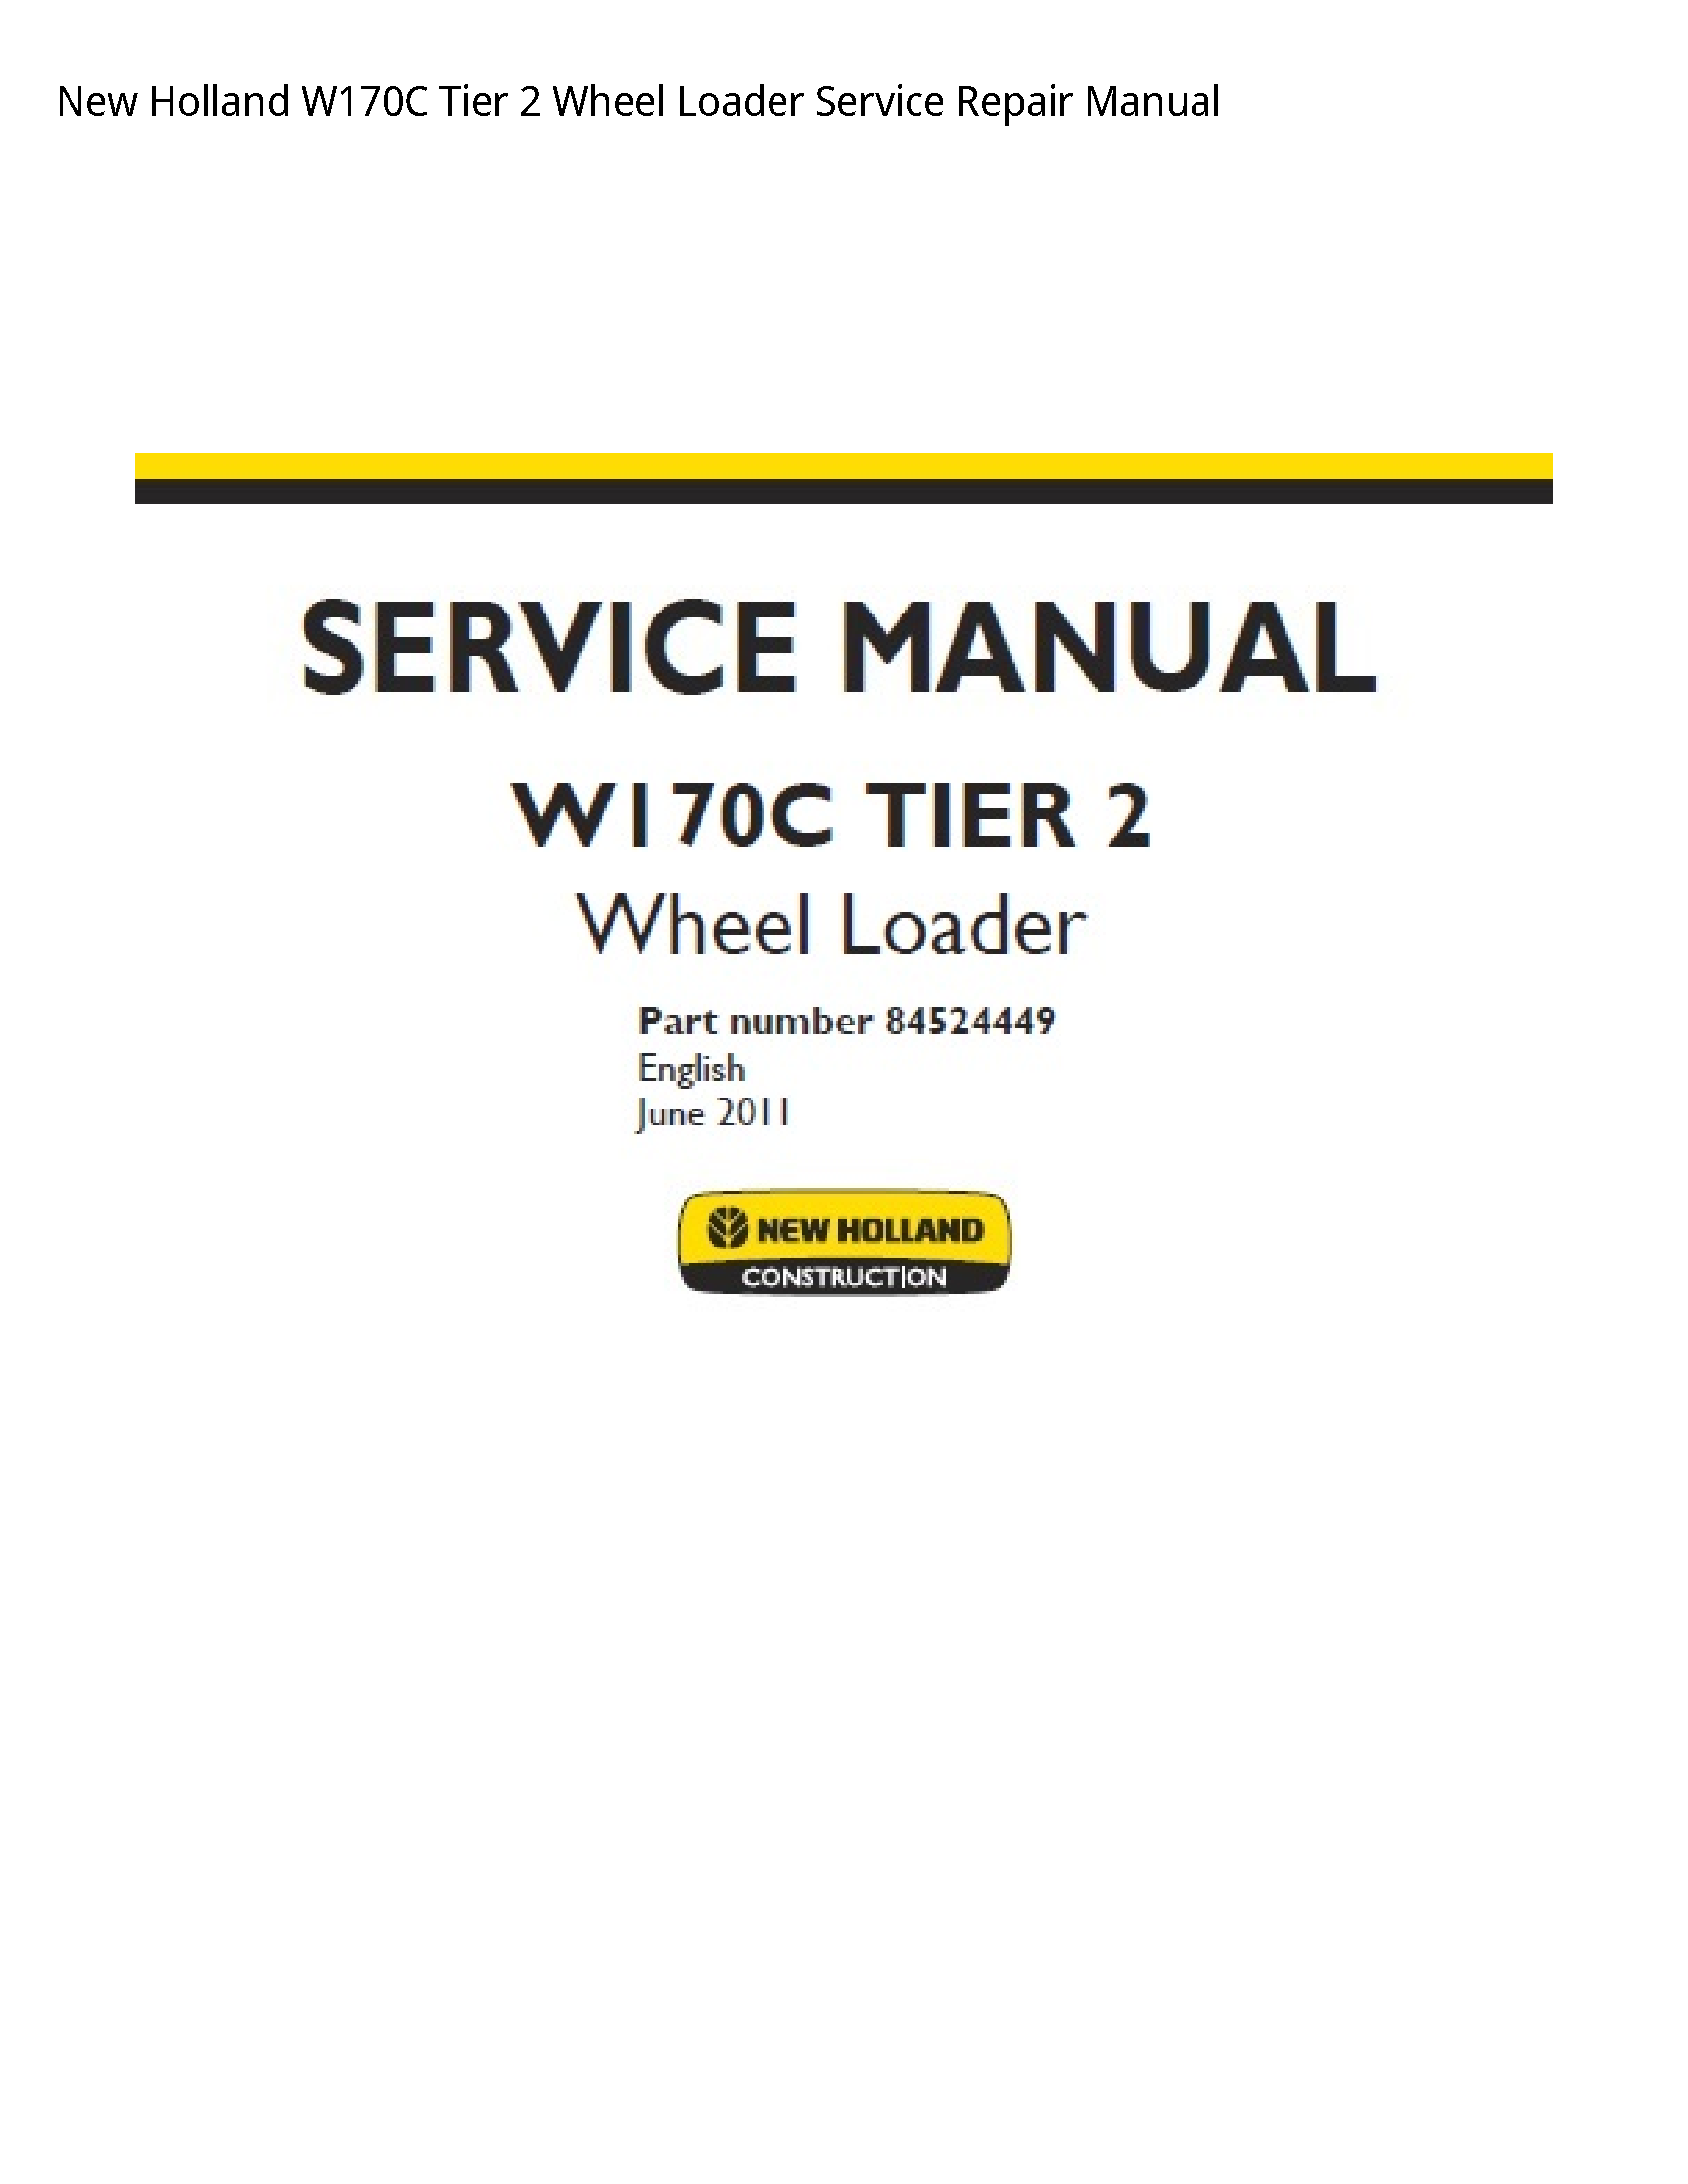 New Holland W170C Tier Wheel Loader manual